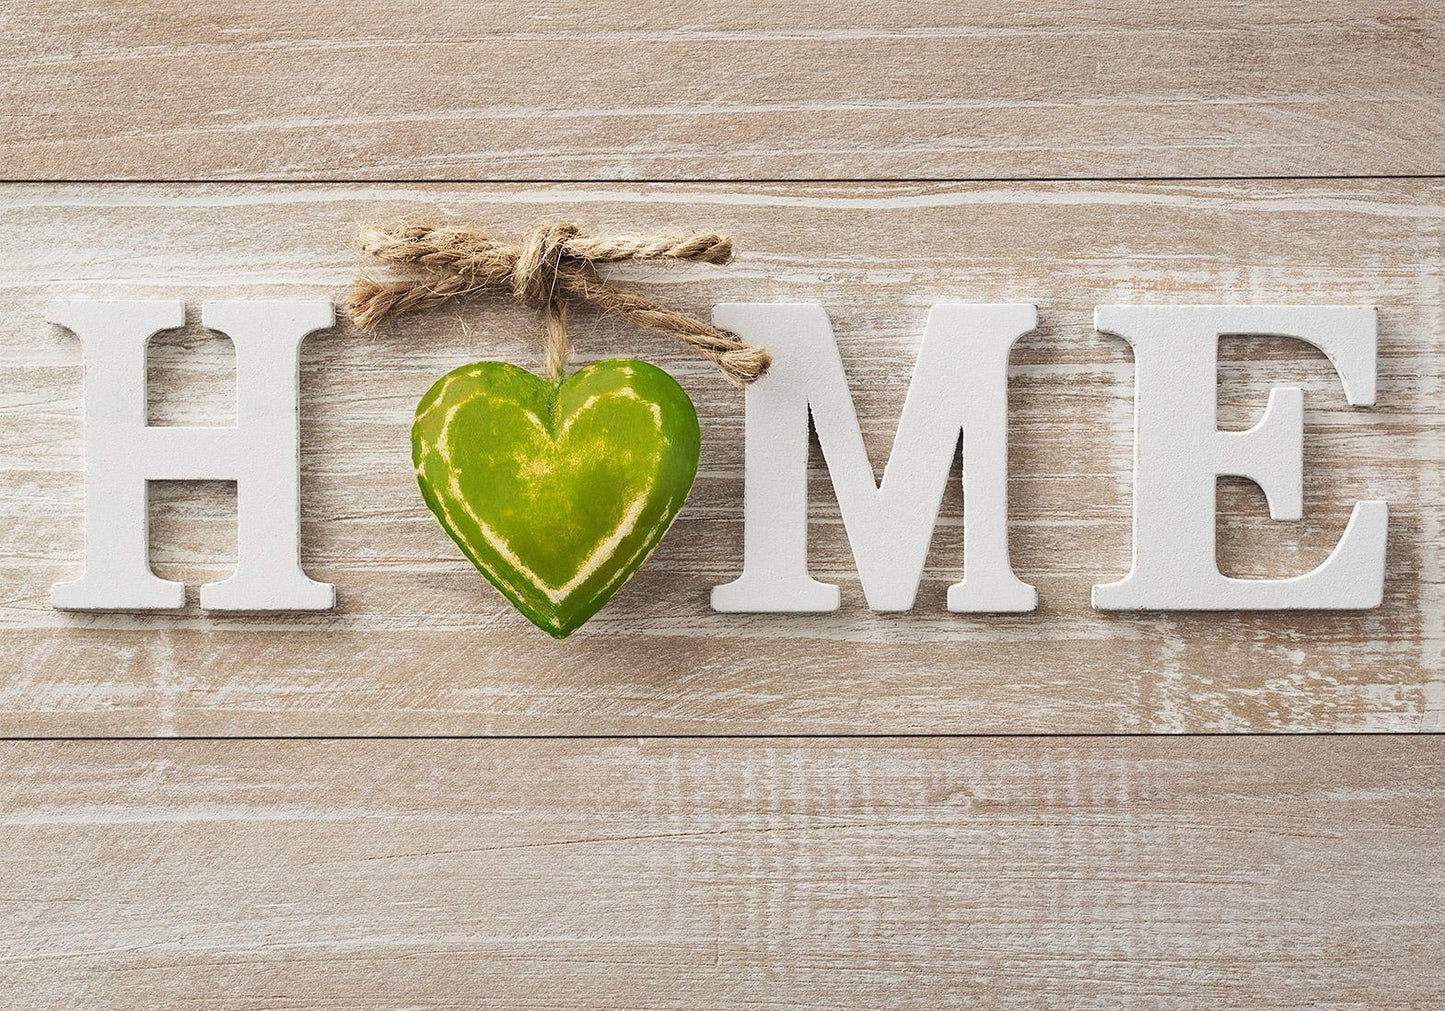 Self-adhesive photo wallpaper - Home Heart (Green)